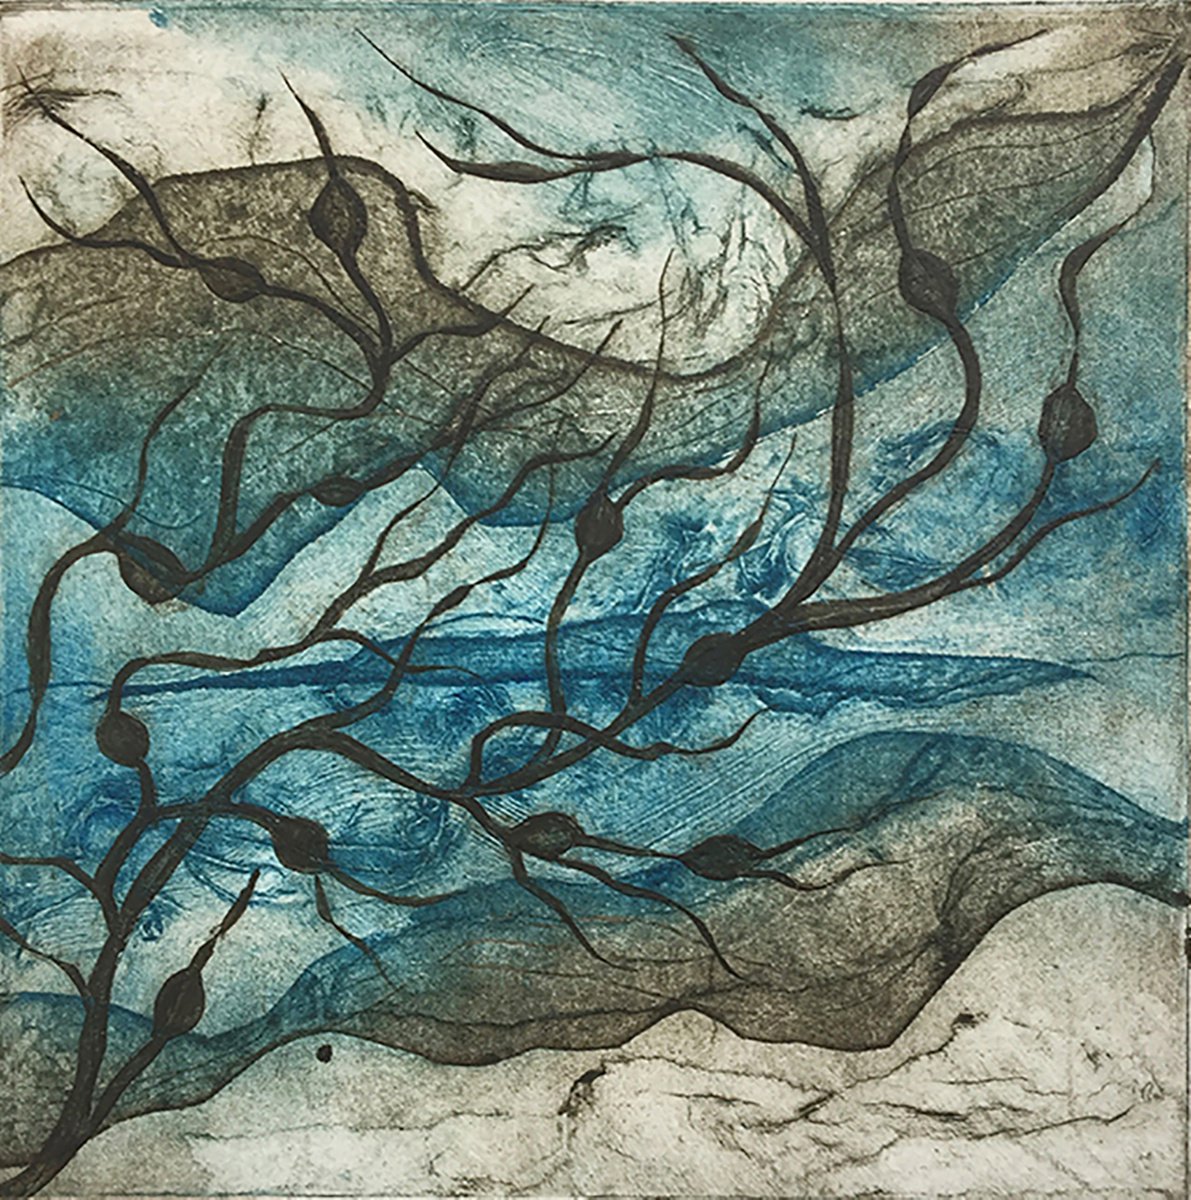 Drifting Seaweed by Karen Beauchamp